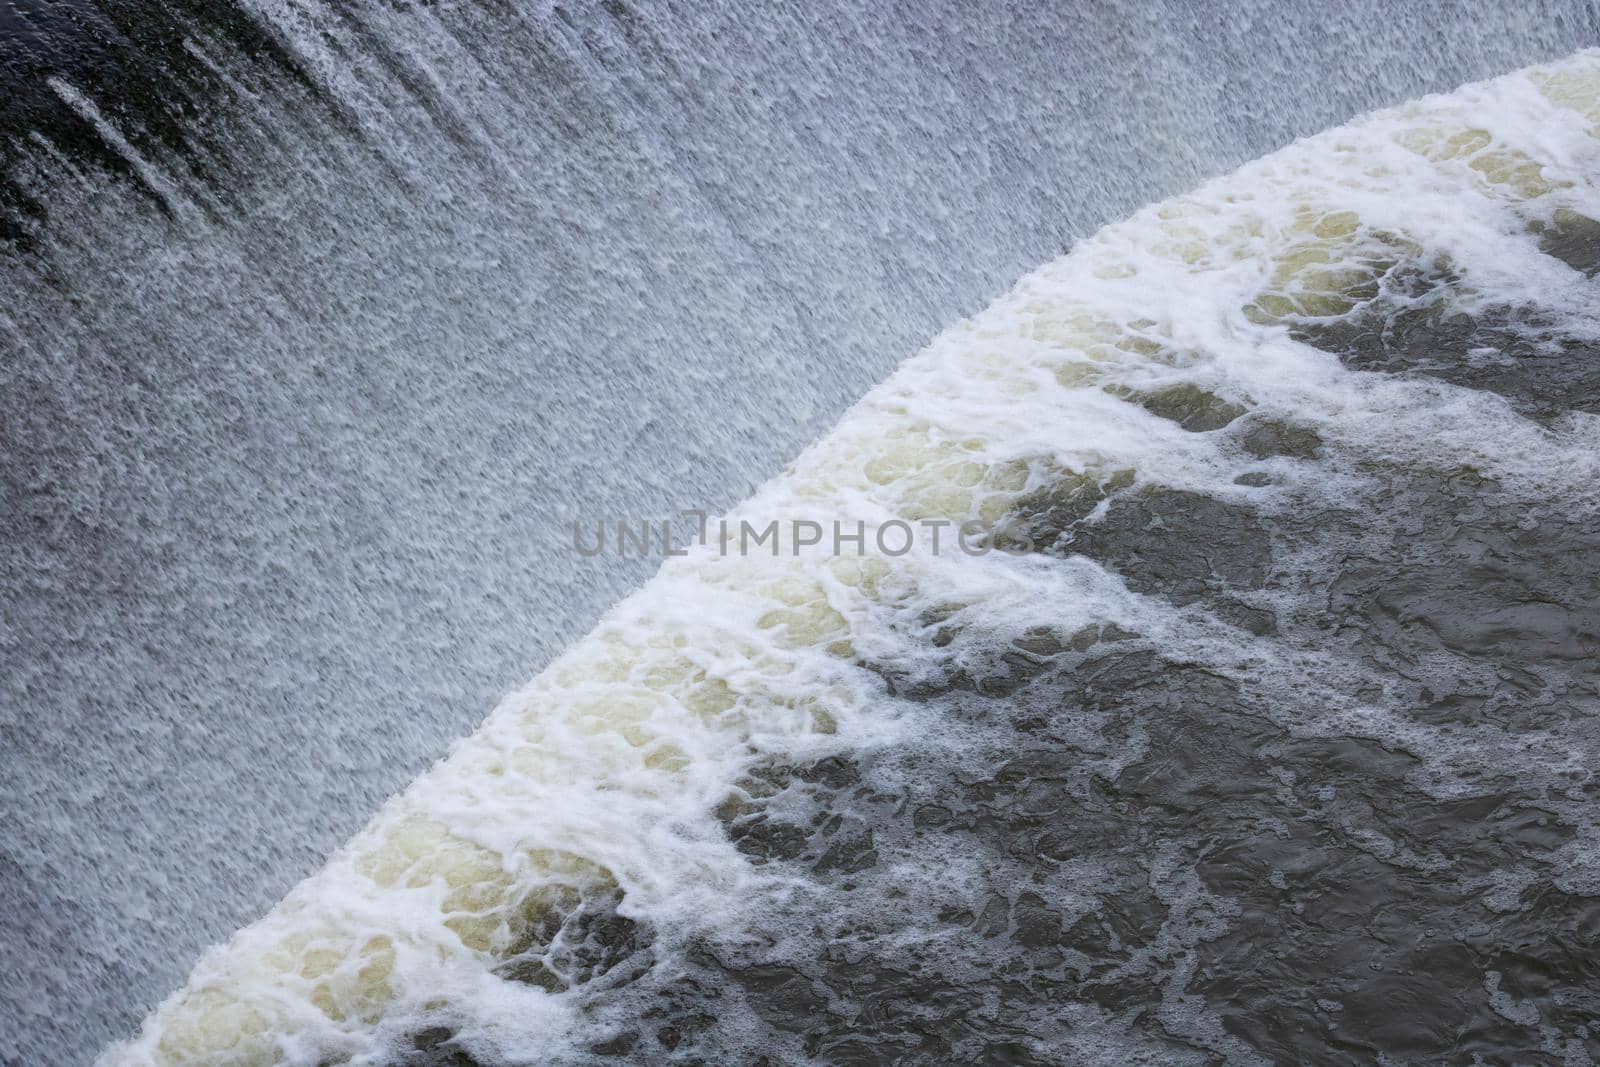 A small waterfall on a man-made river dam by lapushka62